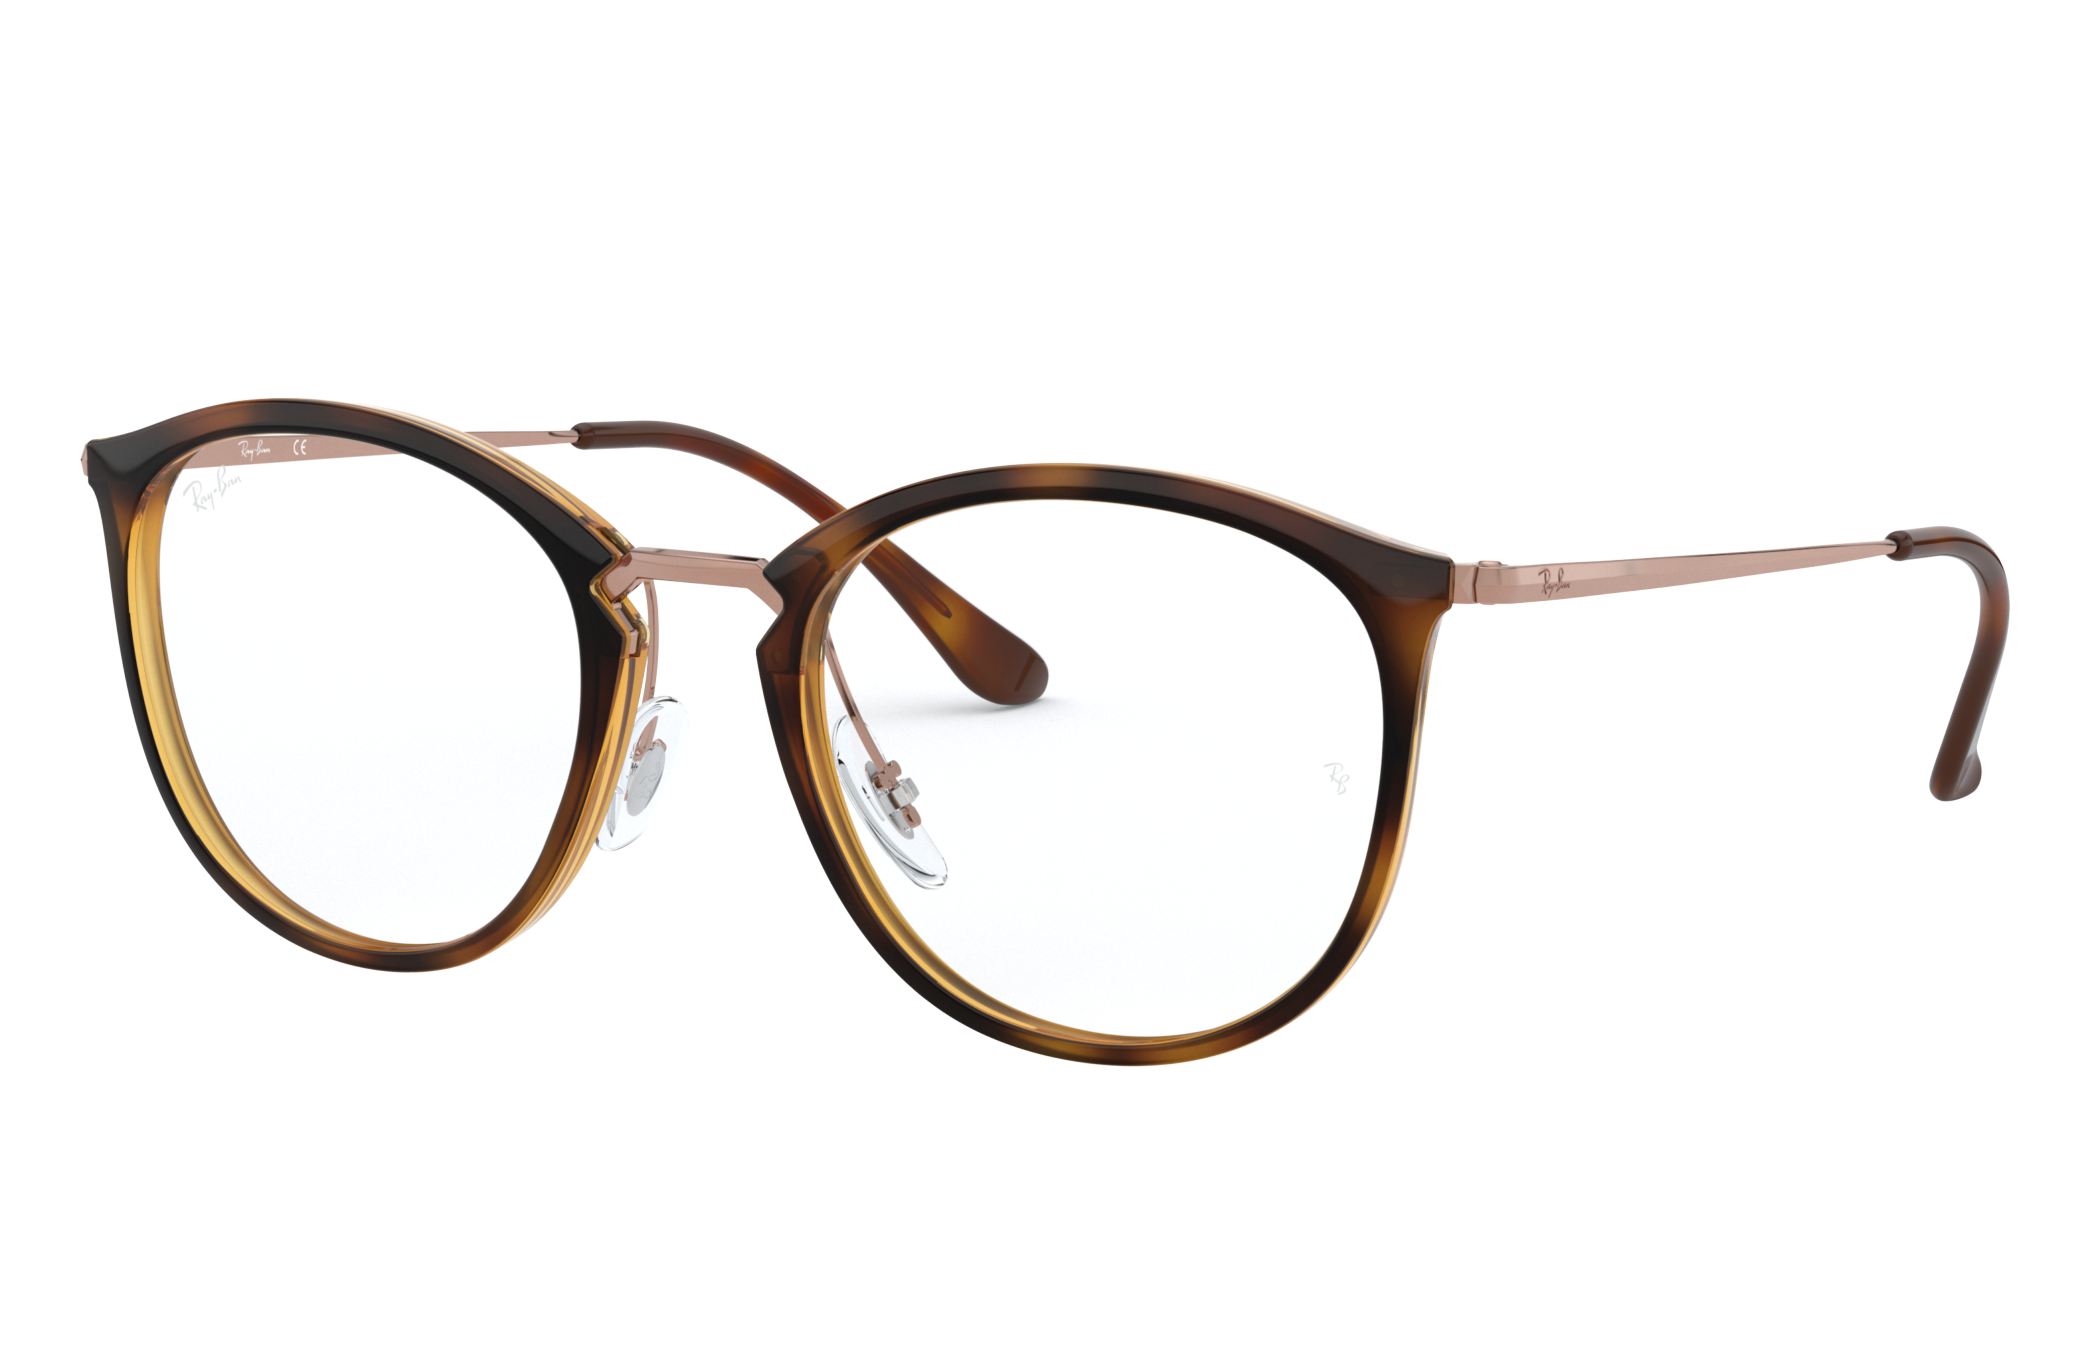 Higgins aftrekken accumuleren Rb7140 Optics Eyeglasses with Striped Havana Frame | Ray-Ban®